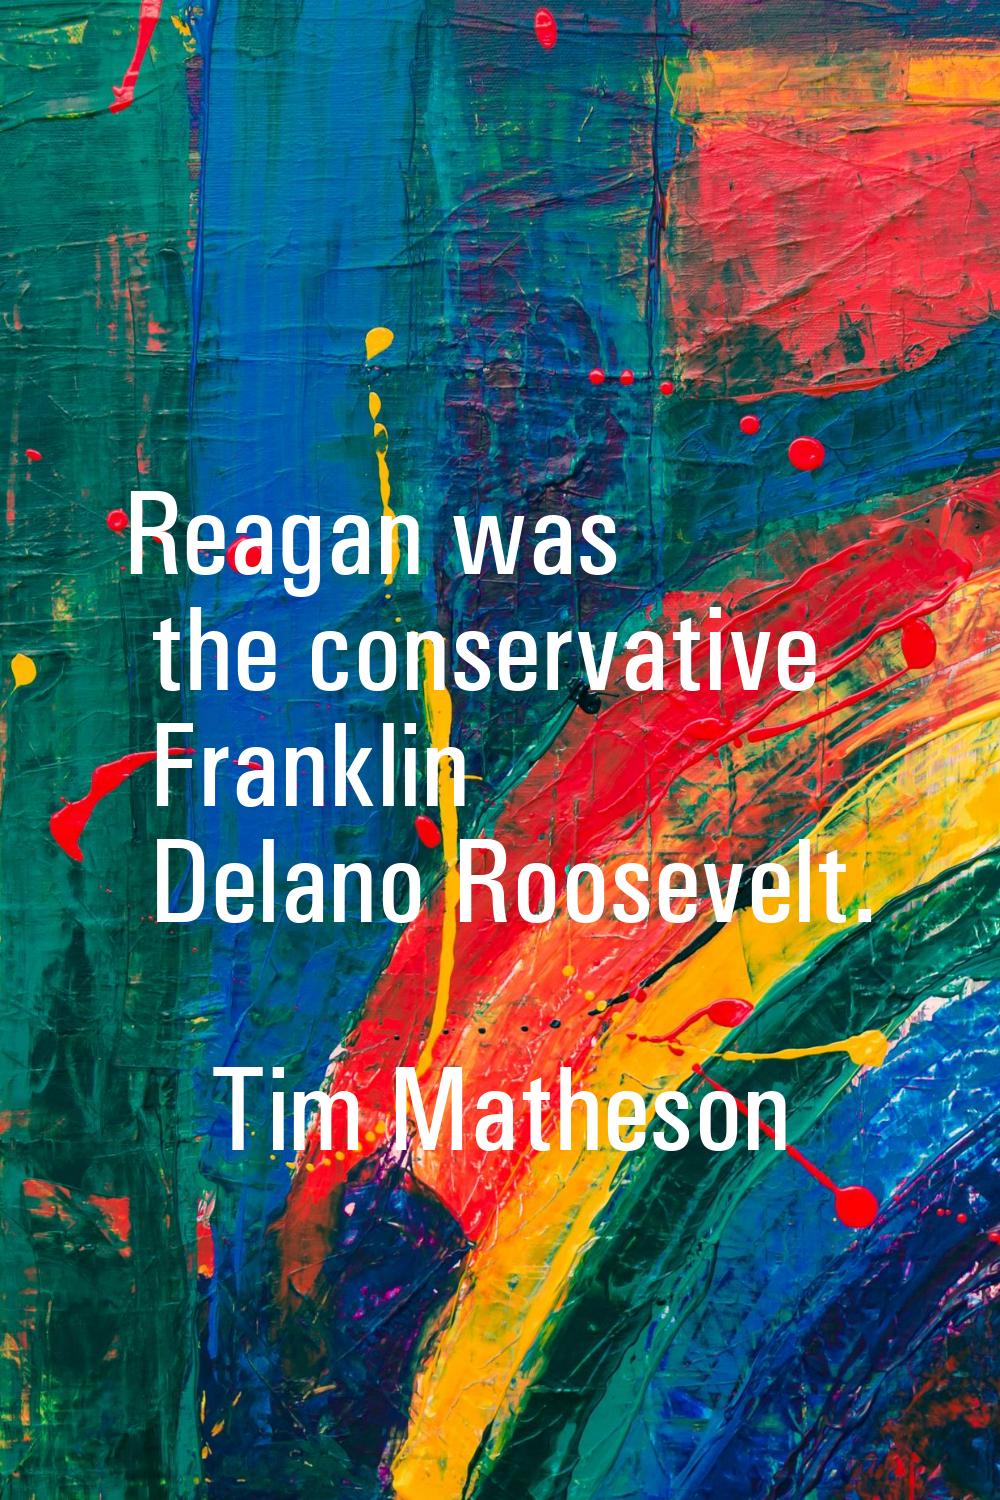 Reagan was the conservative Franklin Delano Roosevelt.